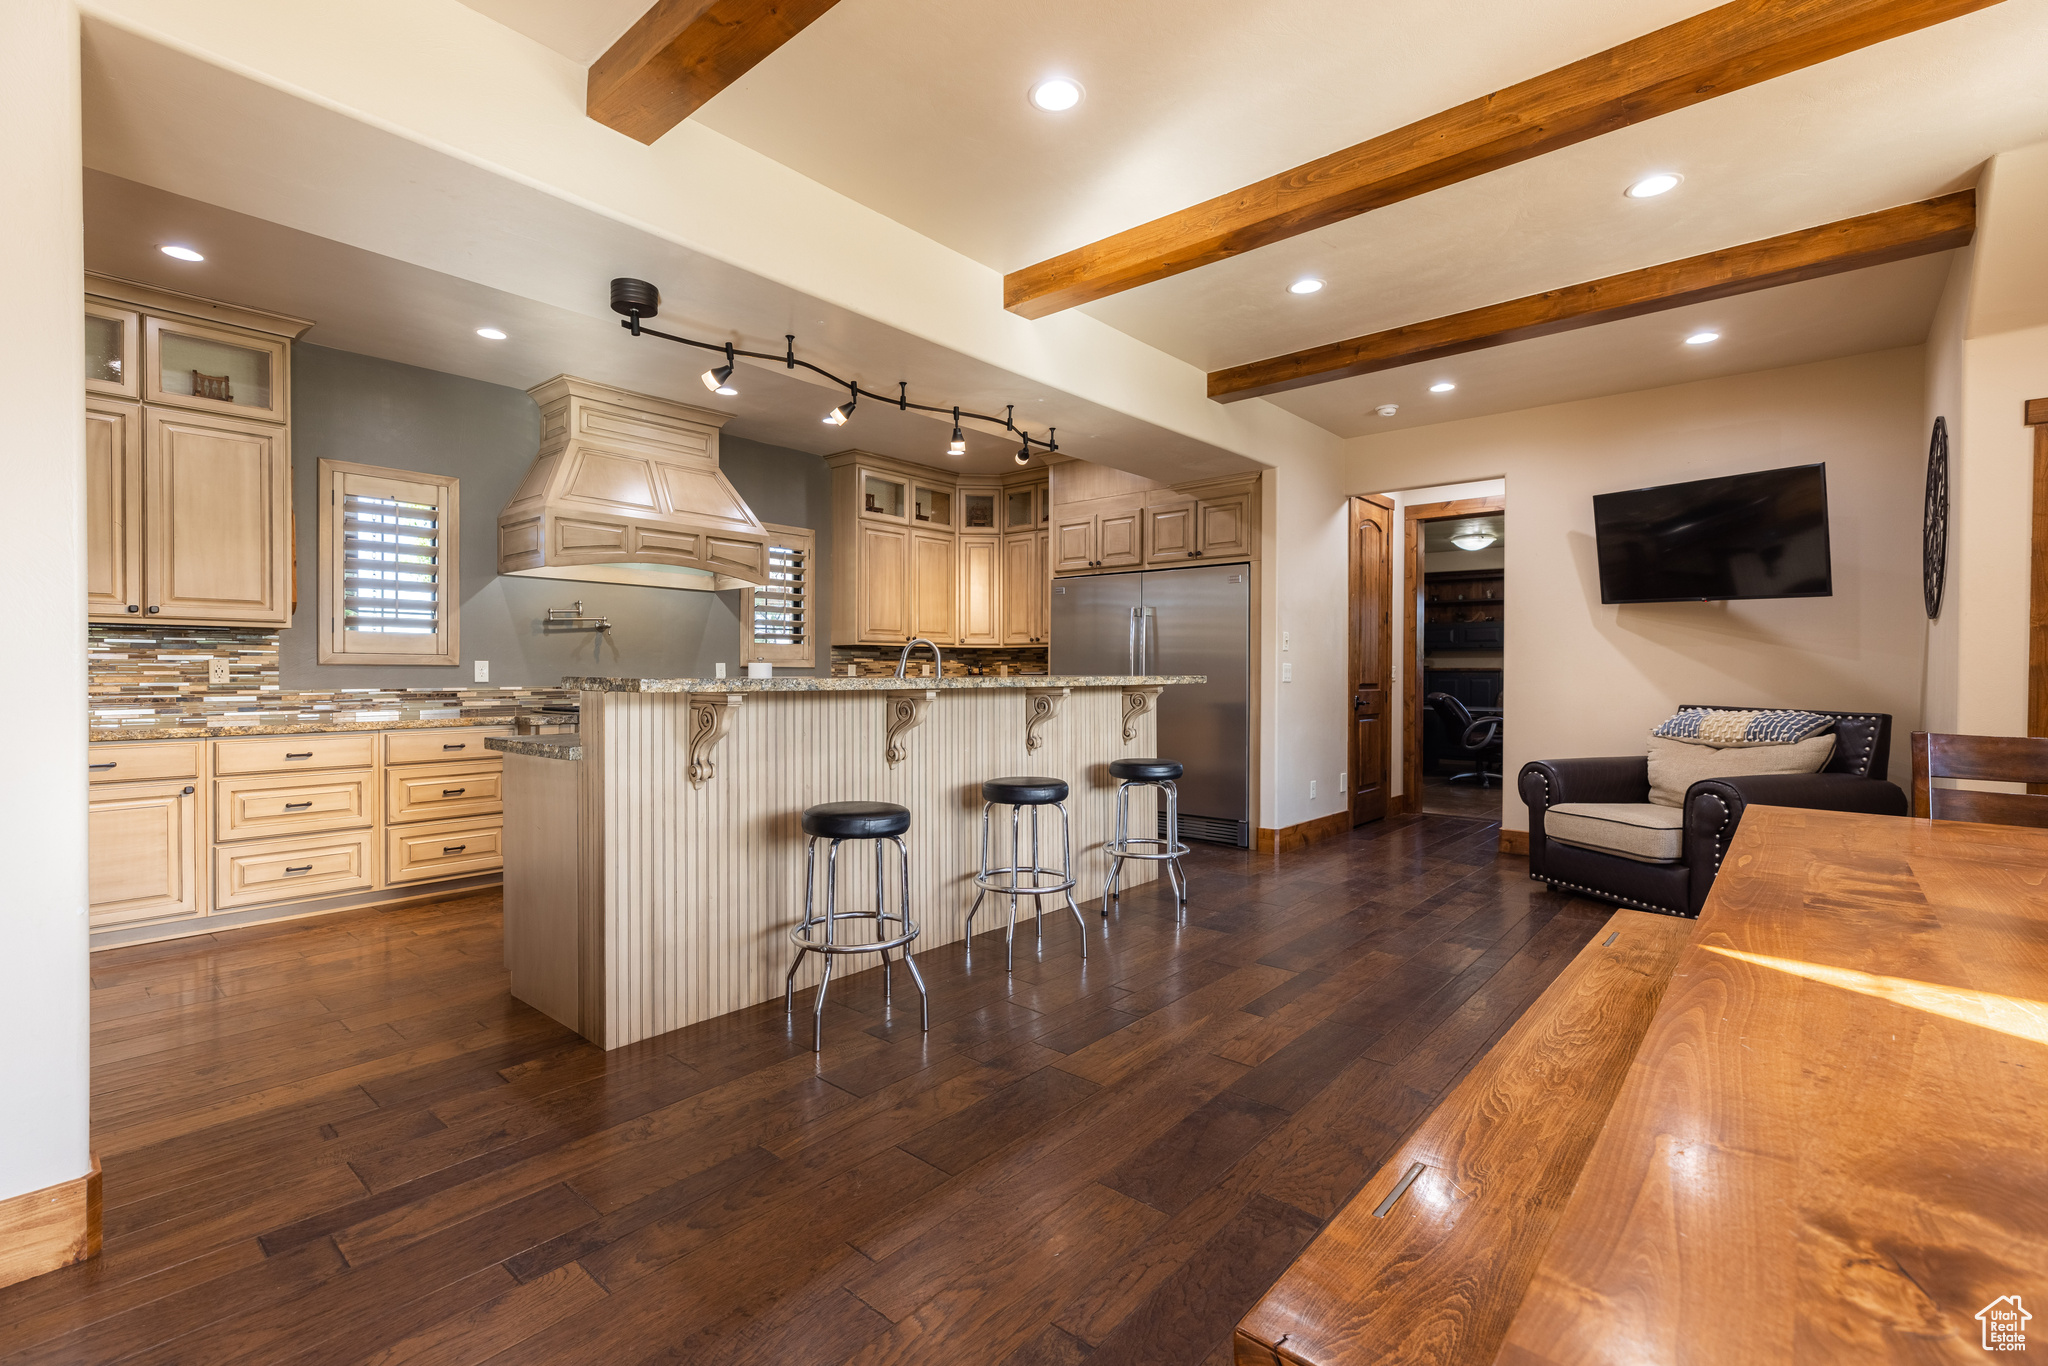 Kitchen with built in refrigerator, light stone countertops, custom range hood, dark hardwood / wood-style floors, and beam ceiling